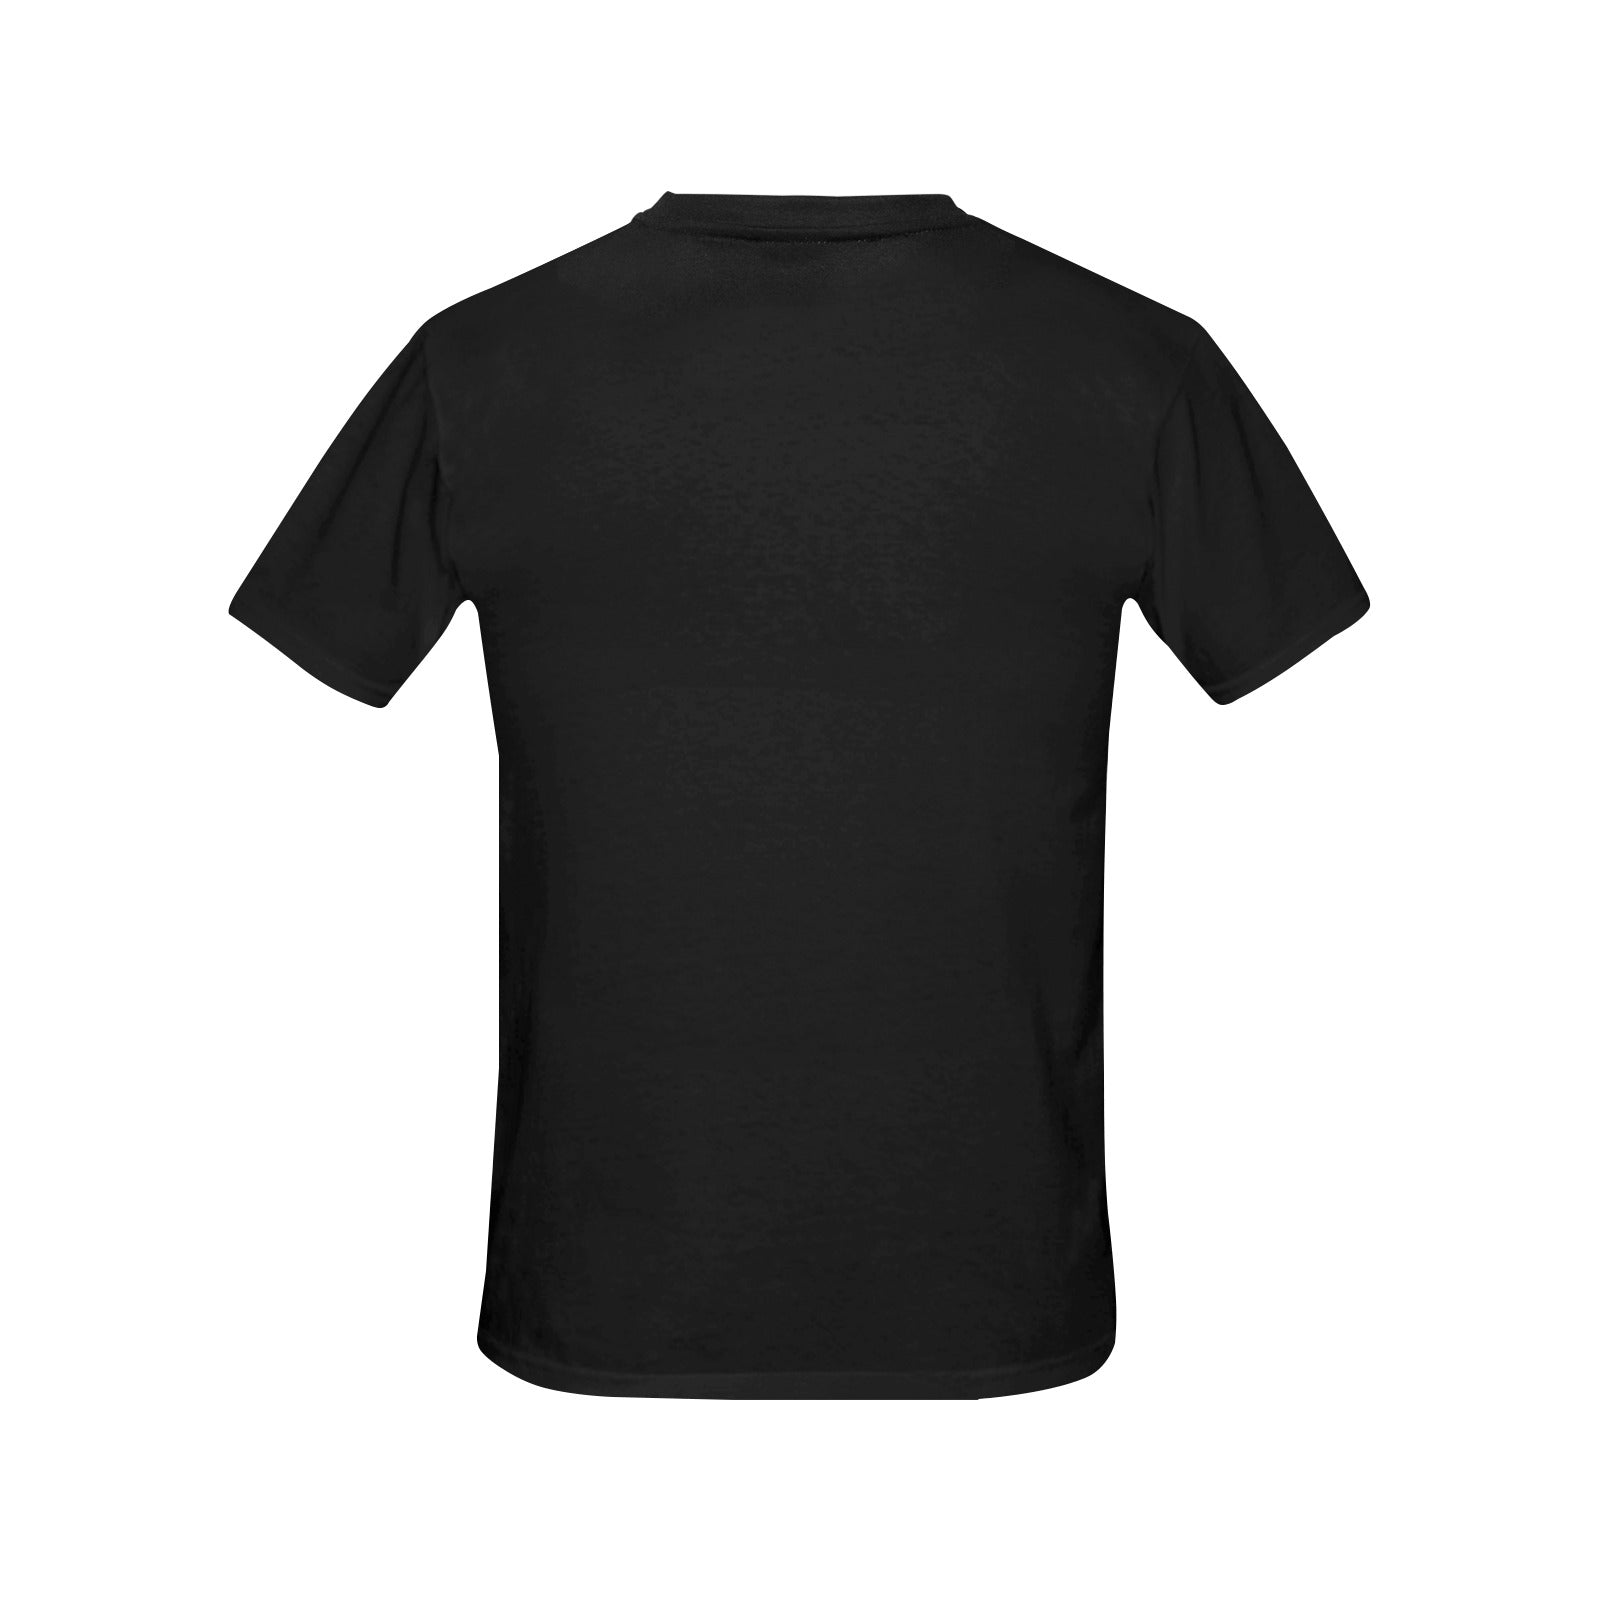 Jet Black Collection Men's All Over Print Crew Neck T-Shirt(T40-2) - ELITA IMPERIA INC.